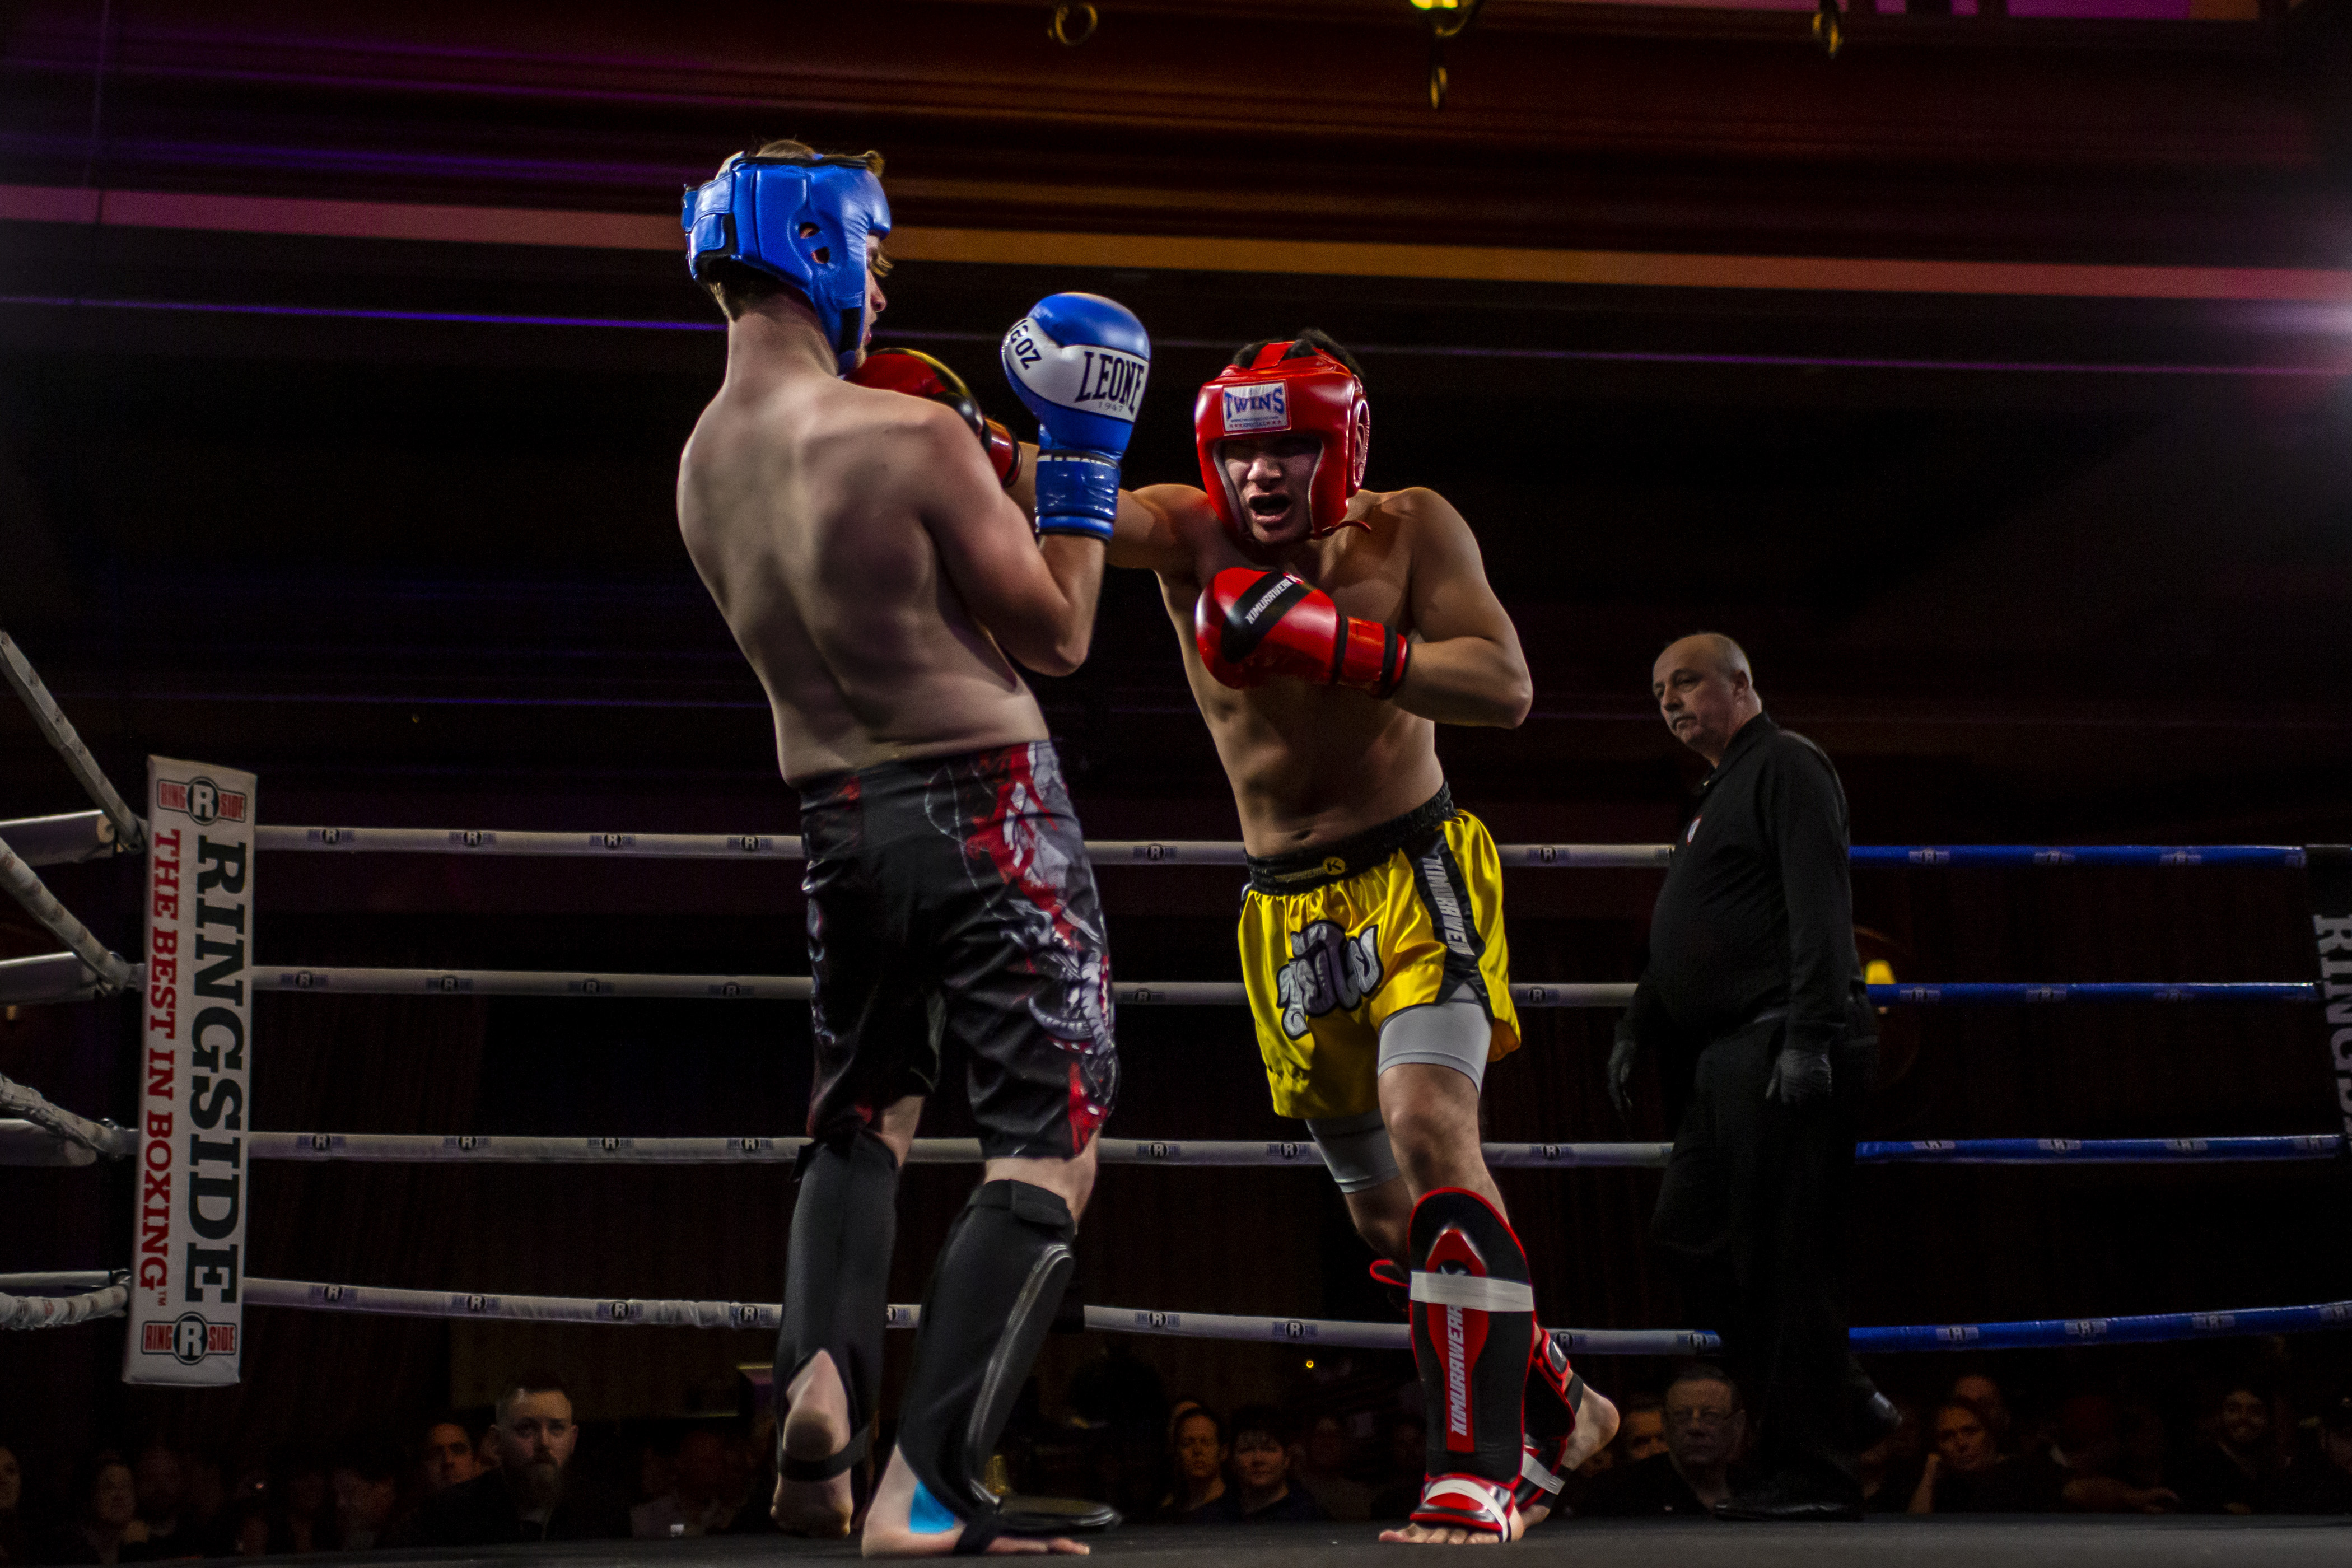 Kickboxing/Muay Thai